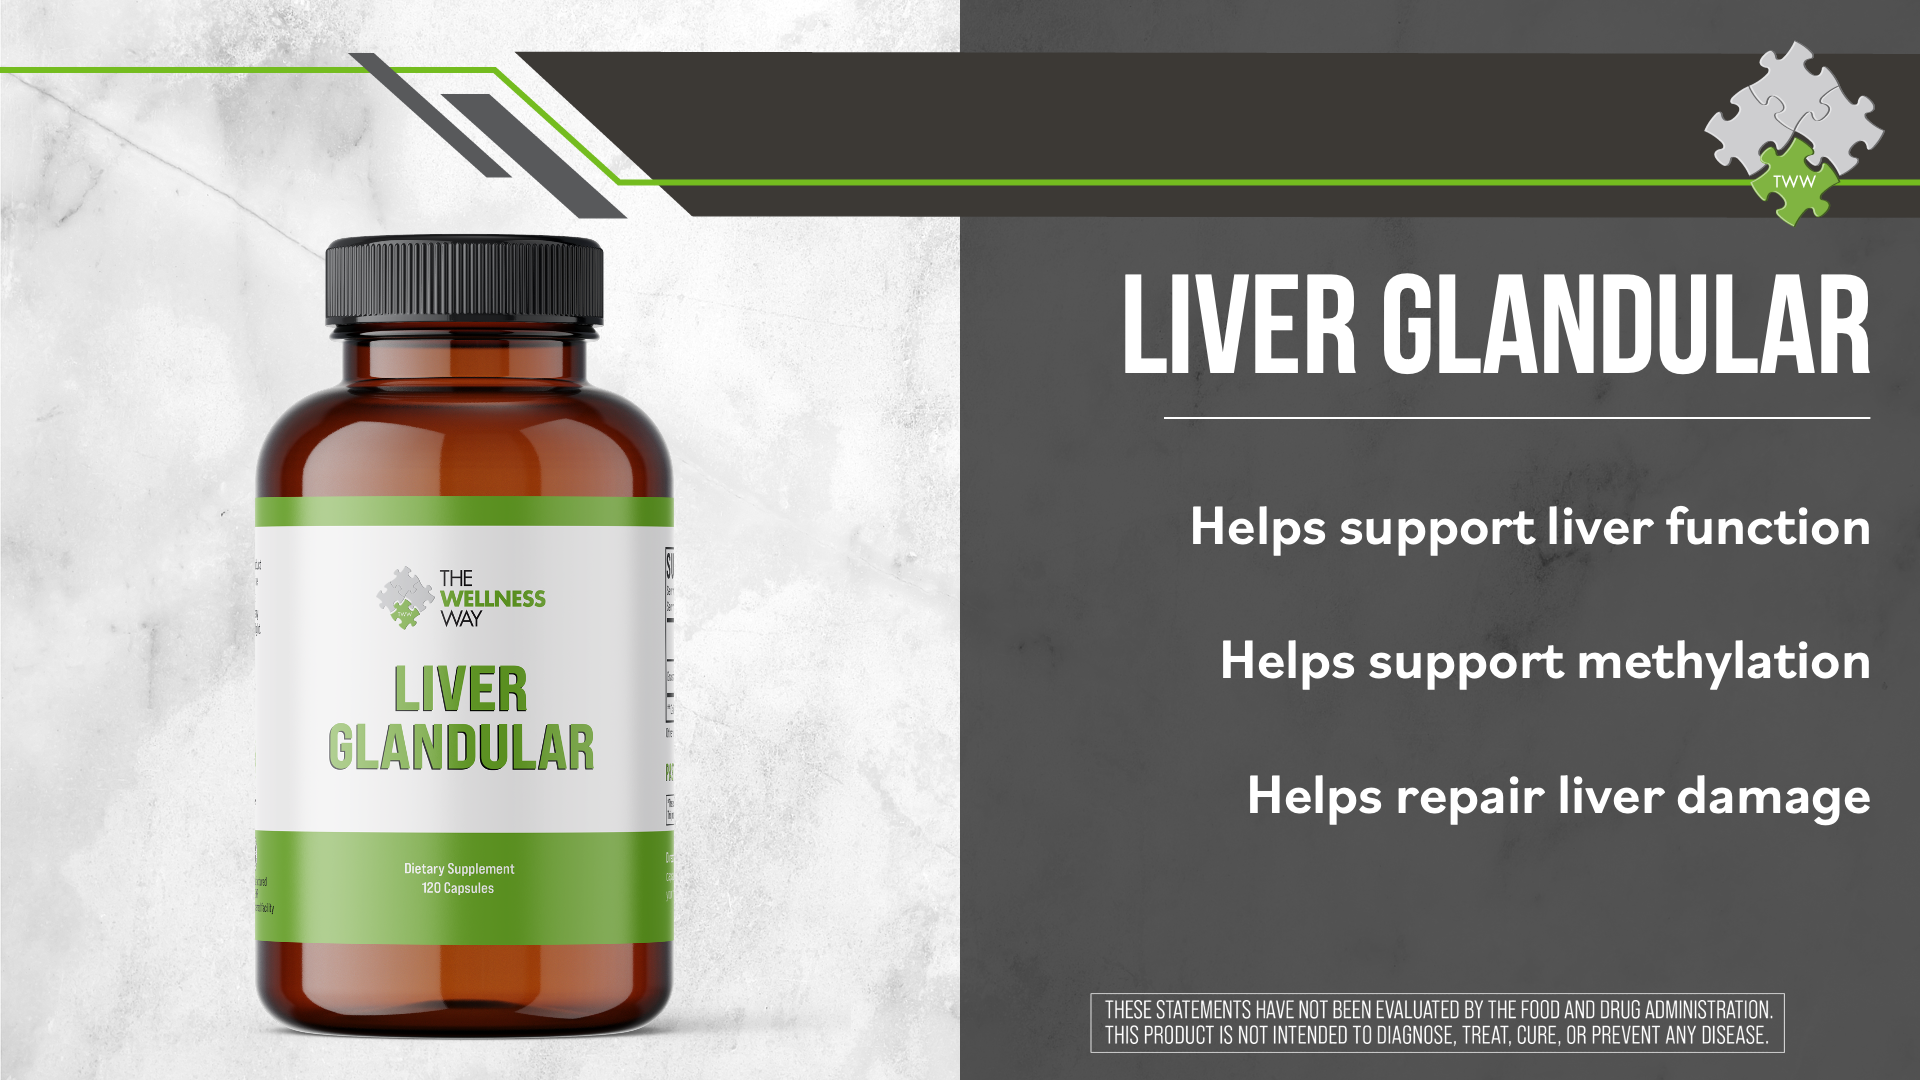 Liver glandular supplement with benefits